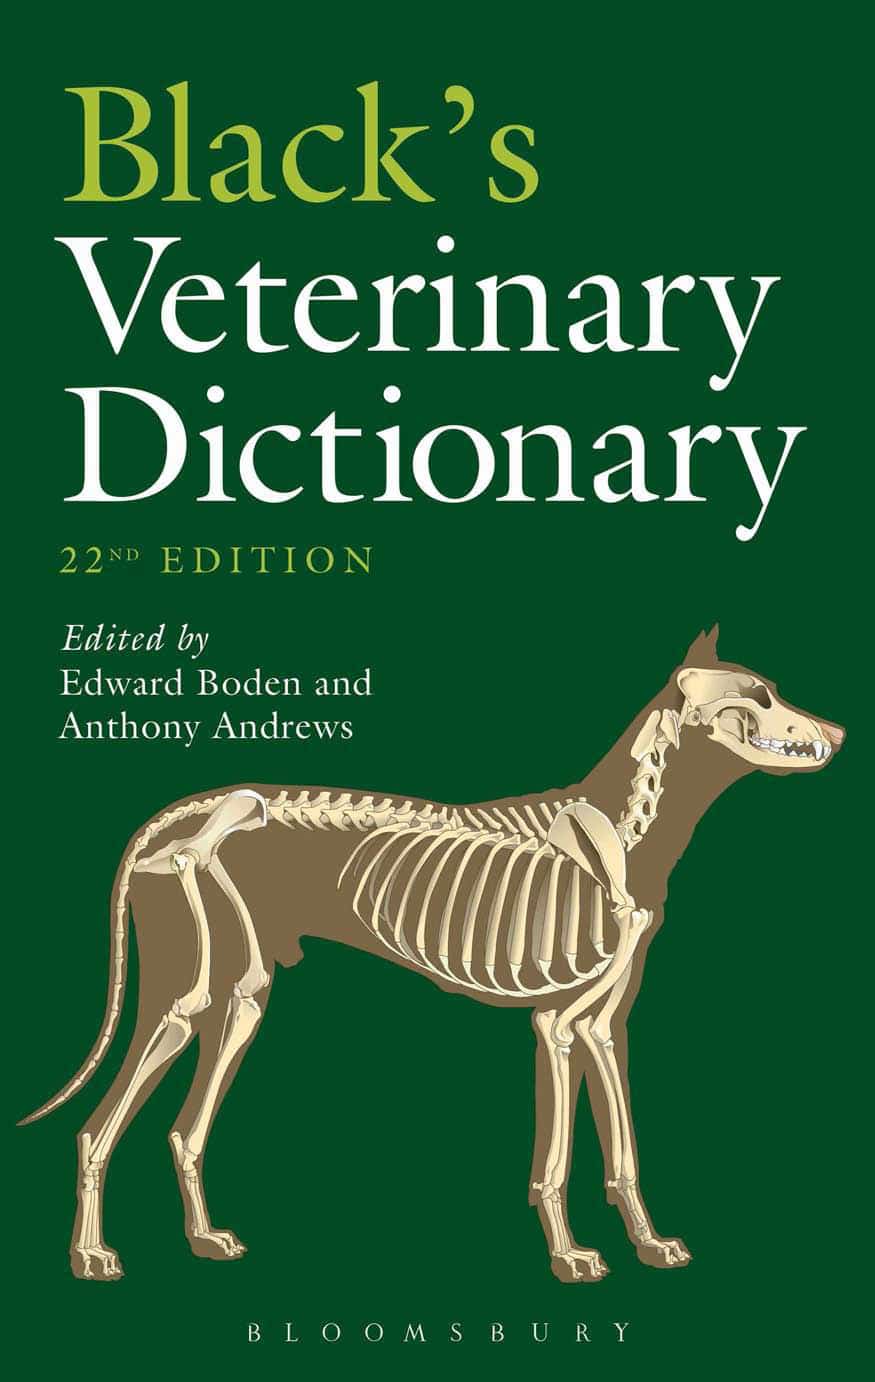 Black’s Veterinary Dictionary 22nd Edition PDF